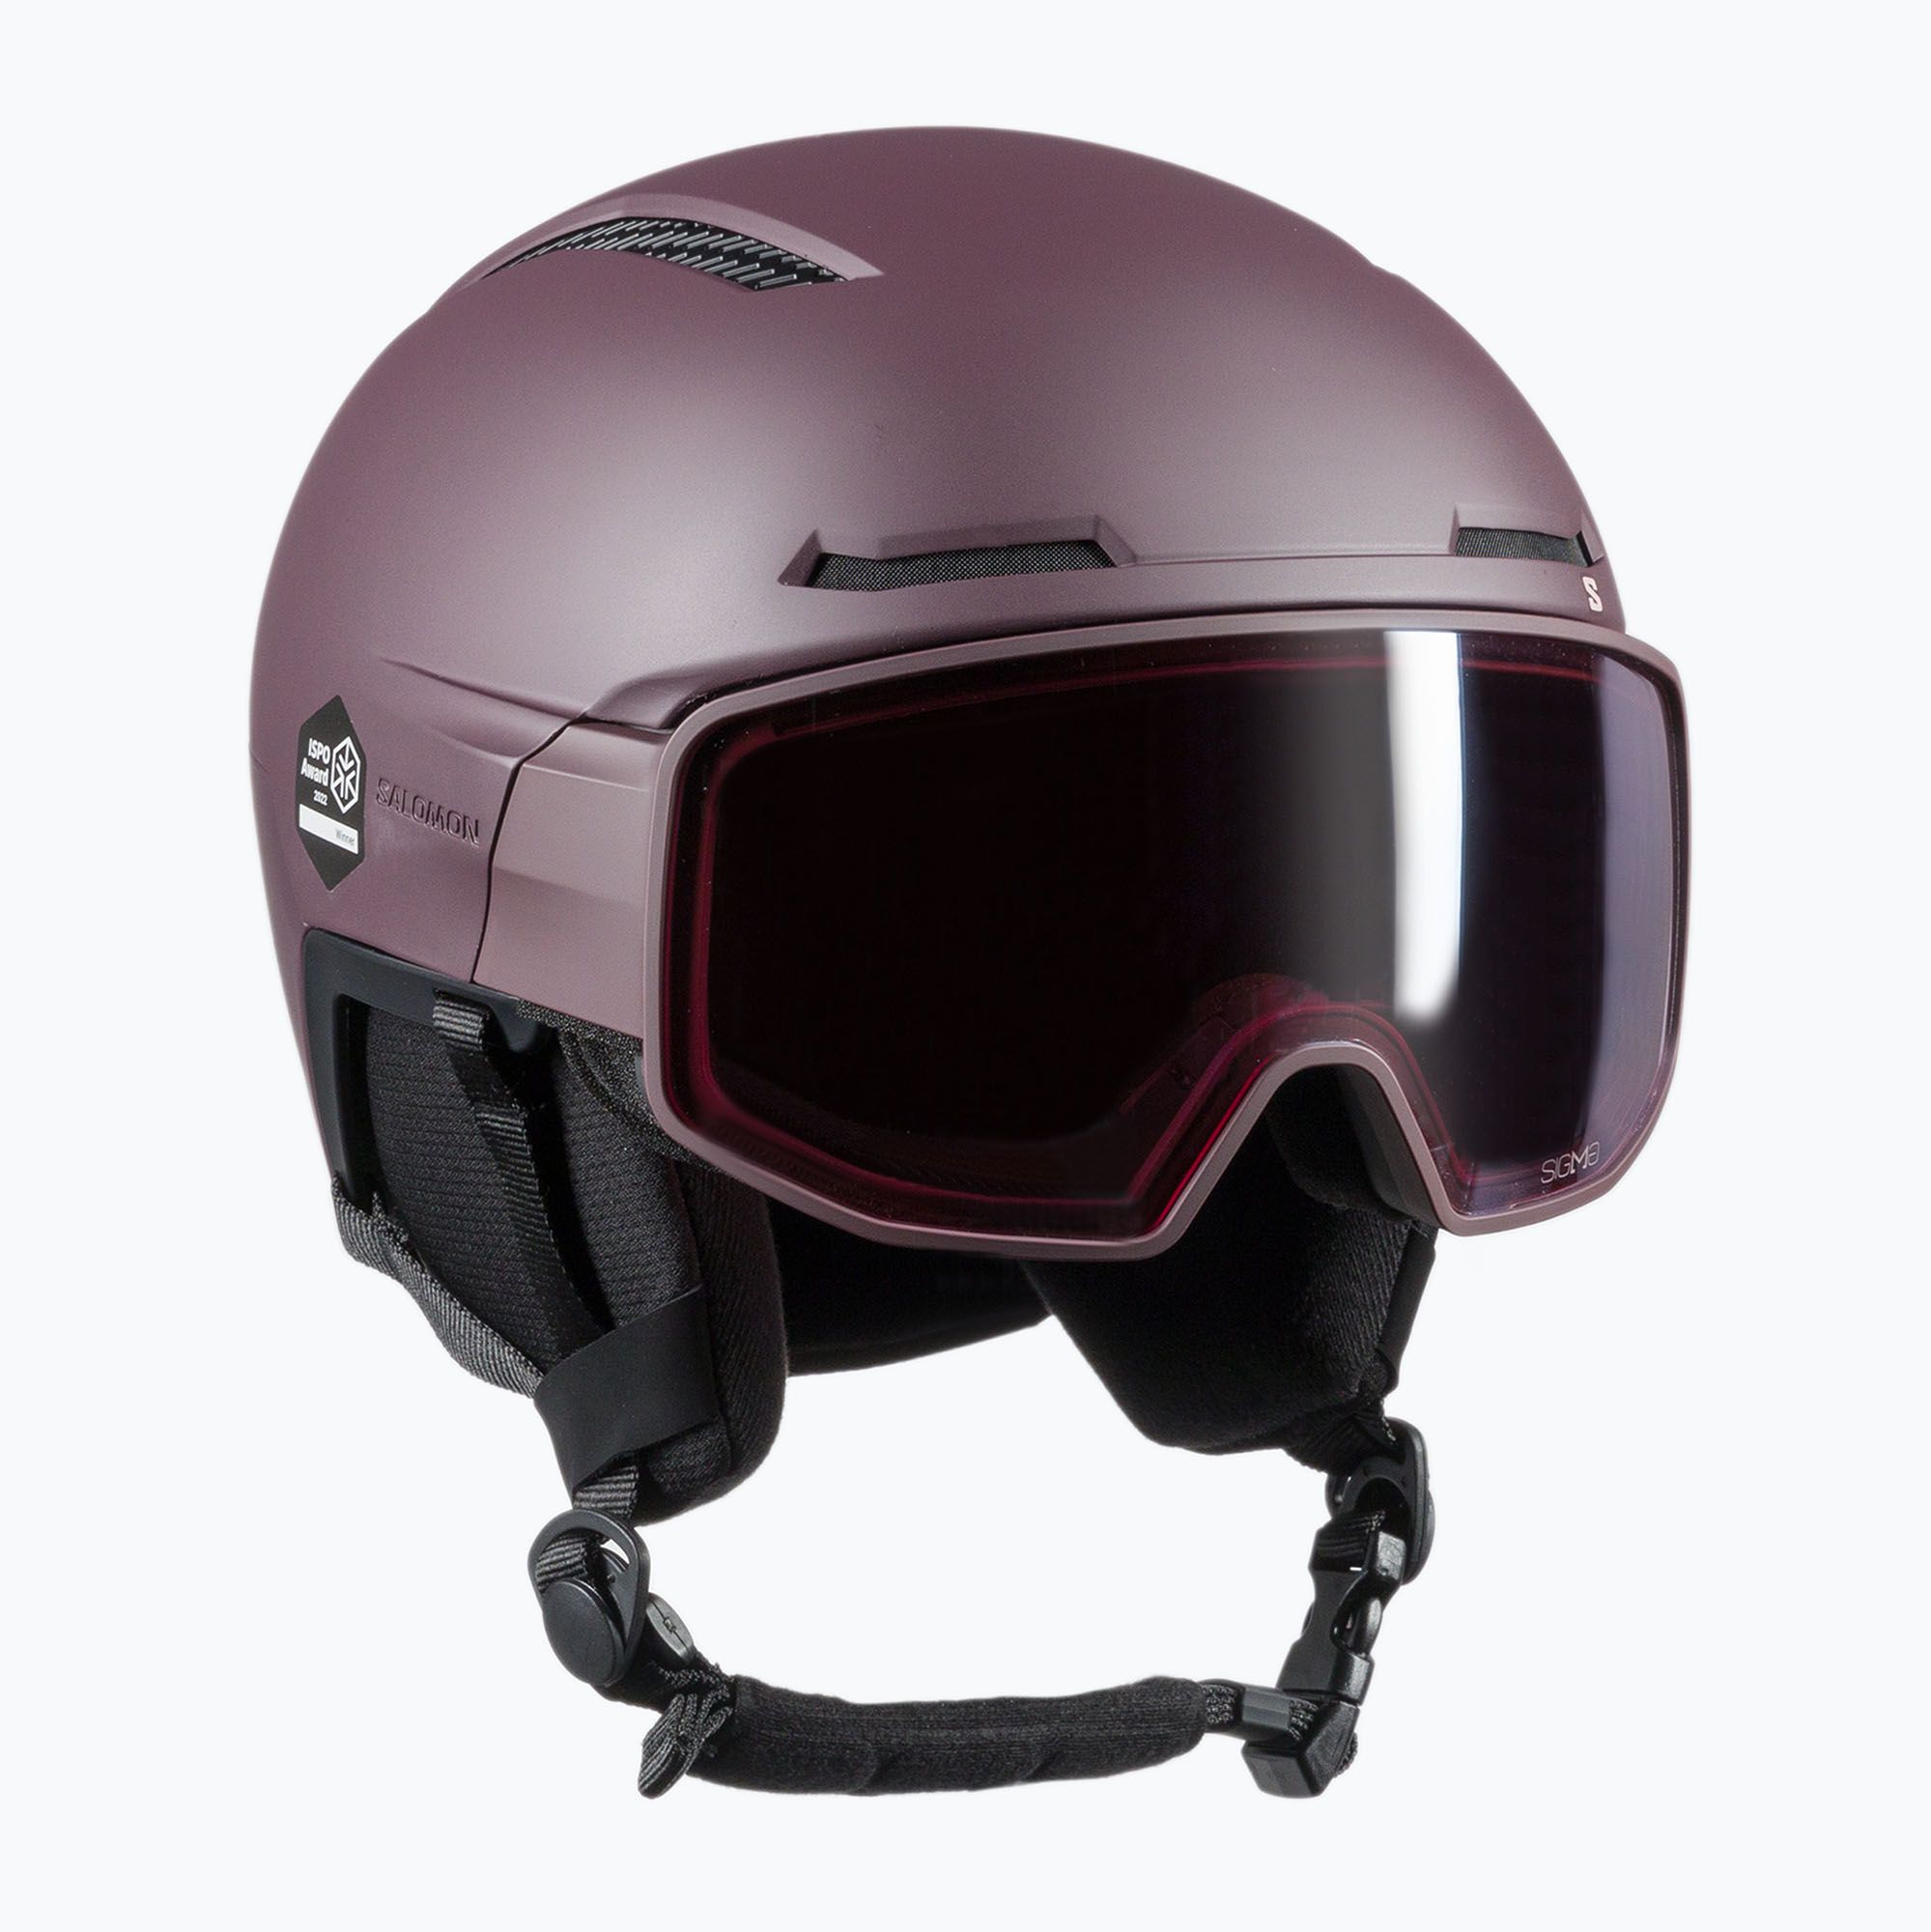 https://sportano.com/img/986c30c27a3d26a3ee16c136f92f4ff5/1/9/193128981266_20-jpg/salomon-driver-pro-sigma-s1-ski-helmet-purple-l47012000-0.jpg